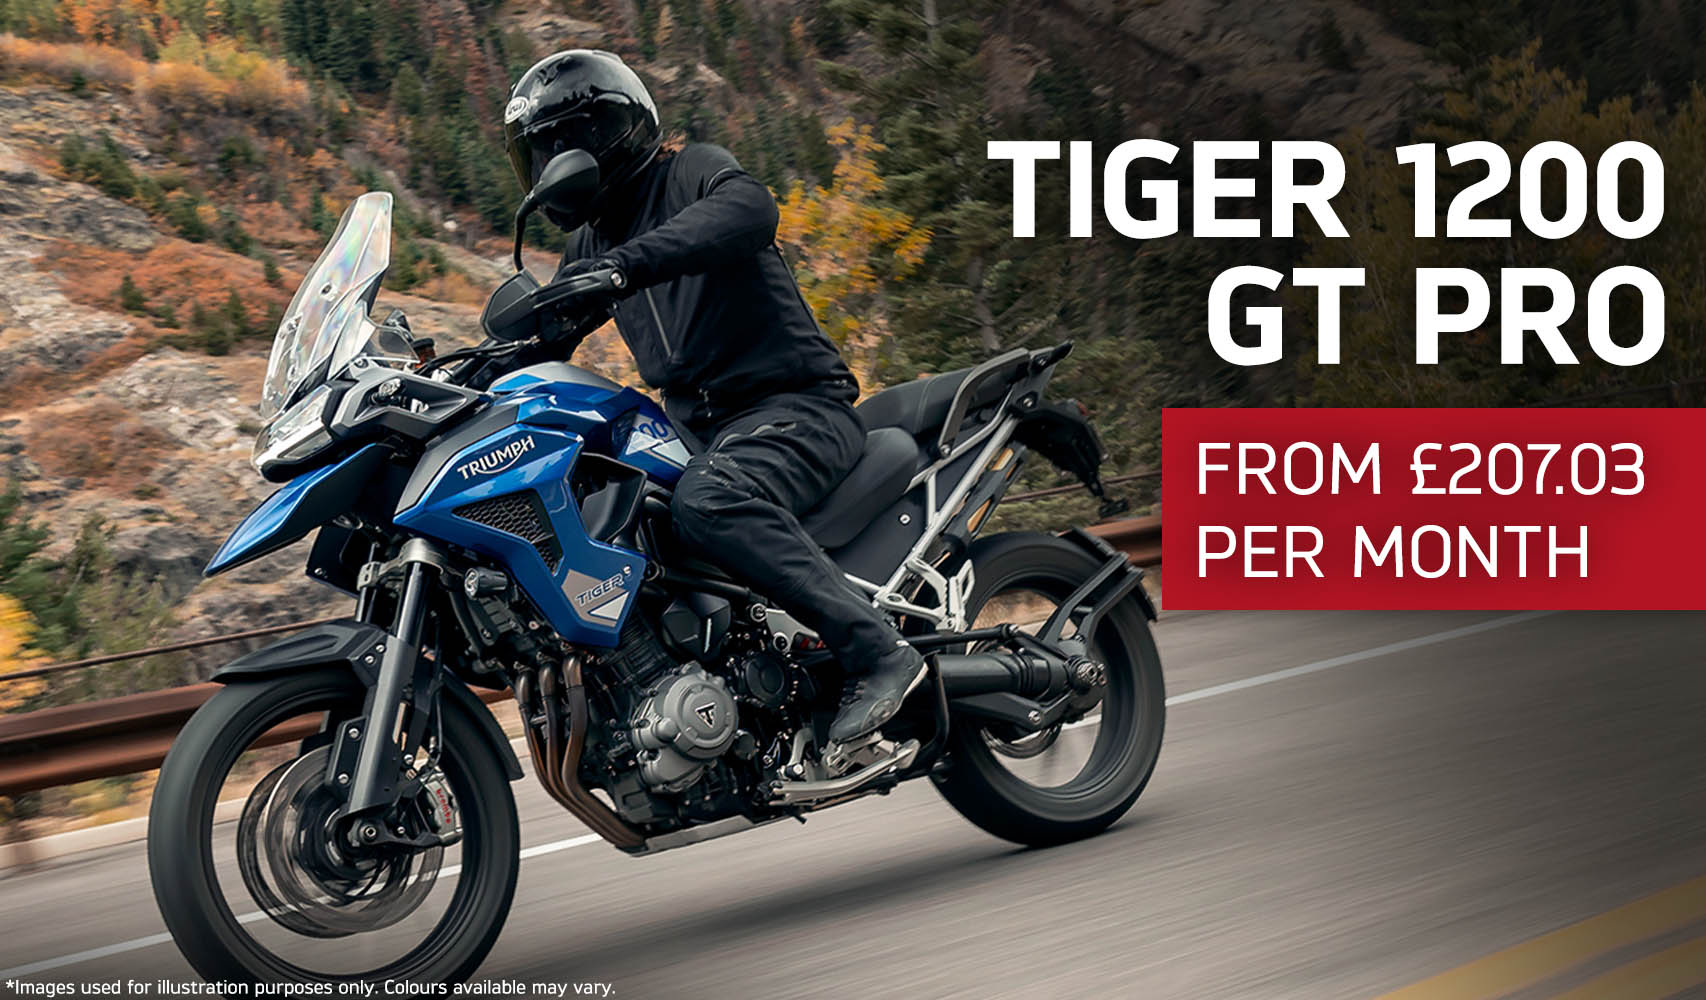 Our new Triumph in-stock bikes - The Tiger 1200 GT Pro